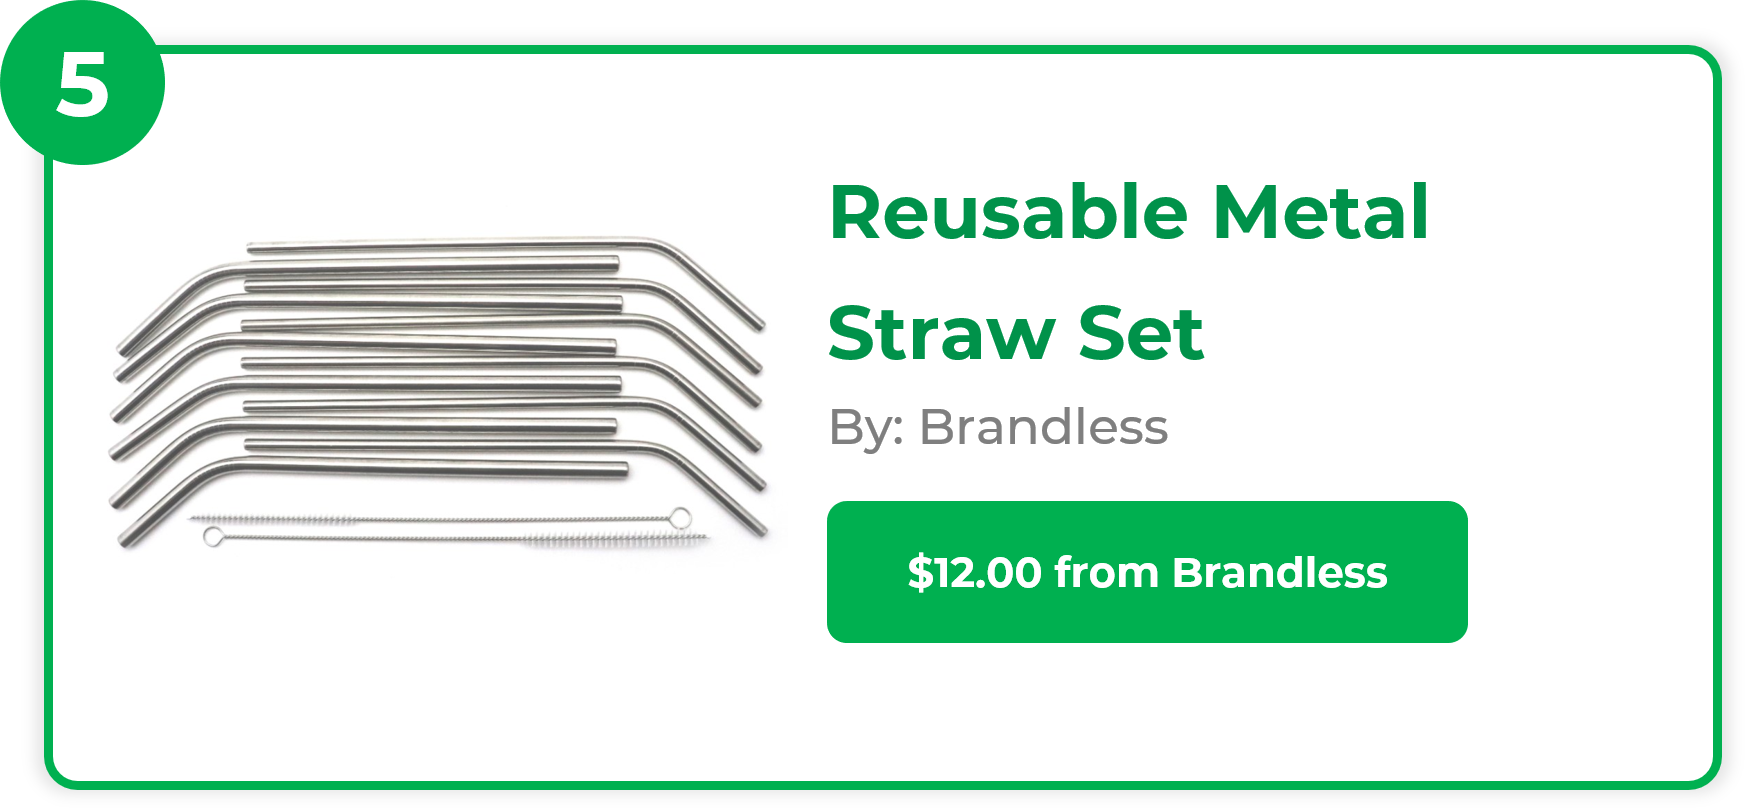 Reusable Metal Straw Set - Brandless